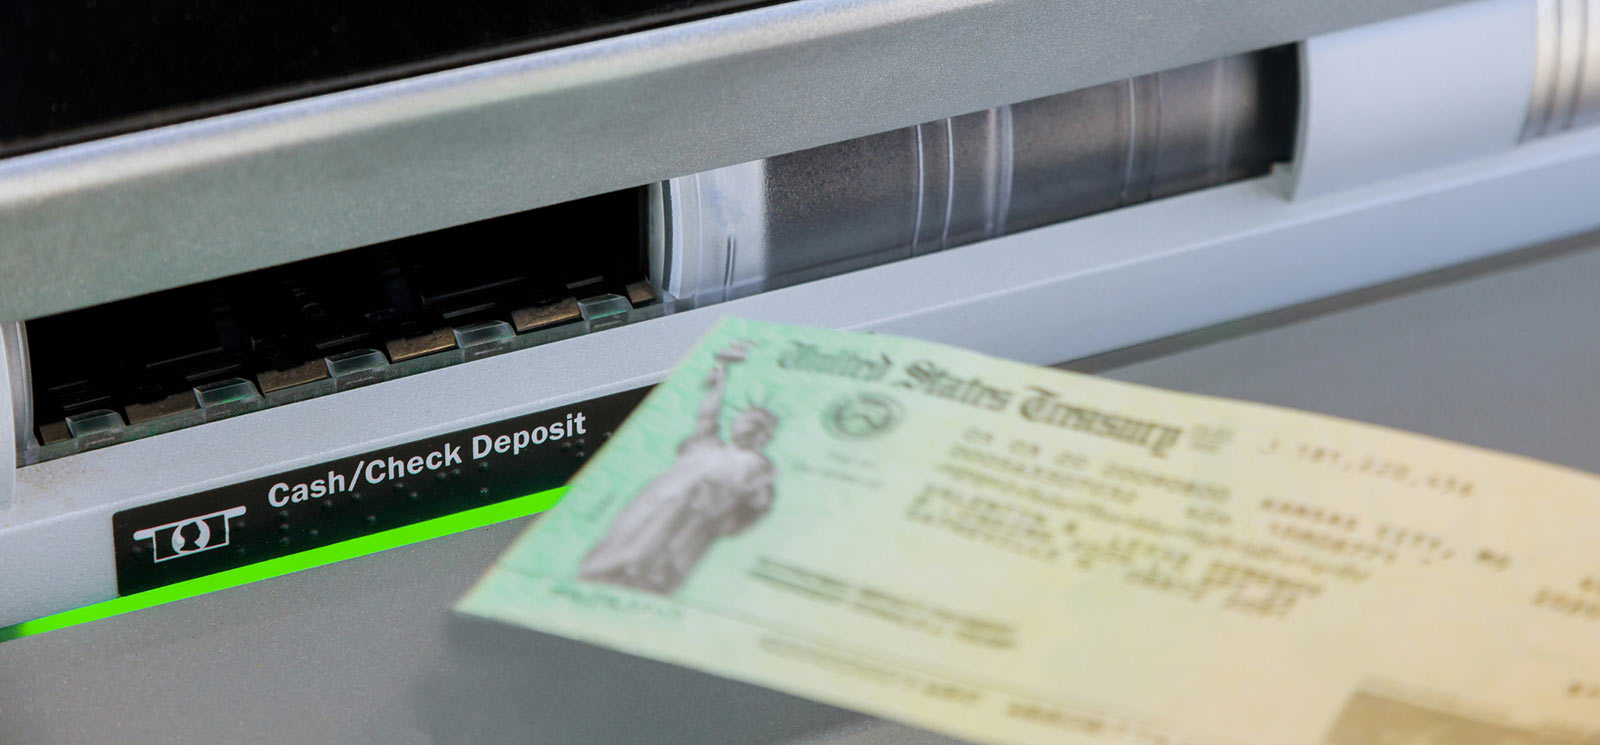 Person depositing a check into an ATM.